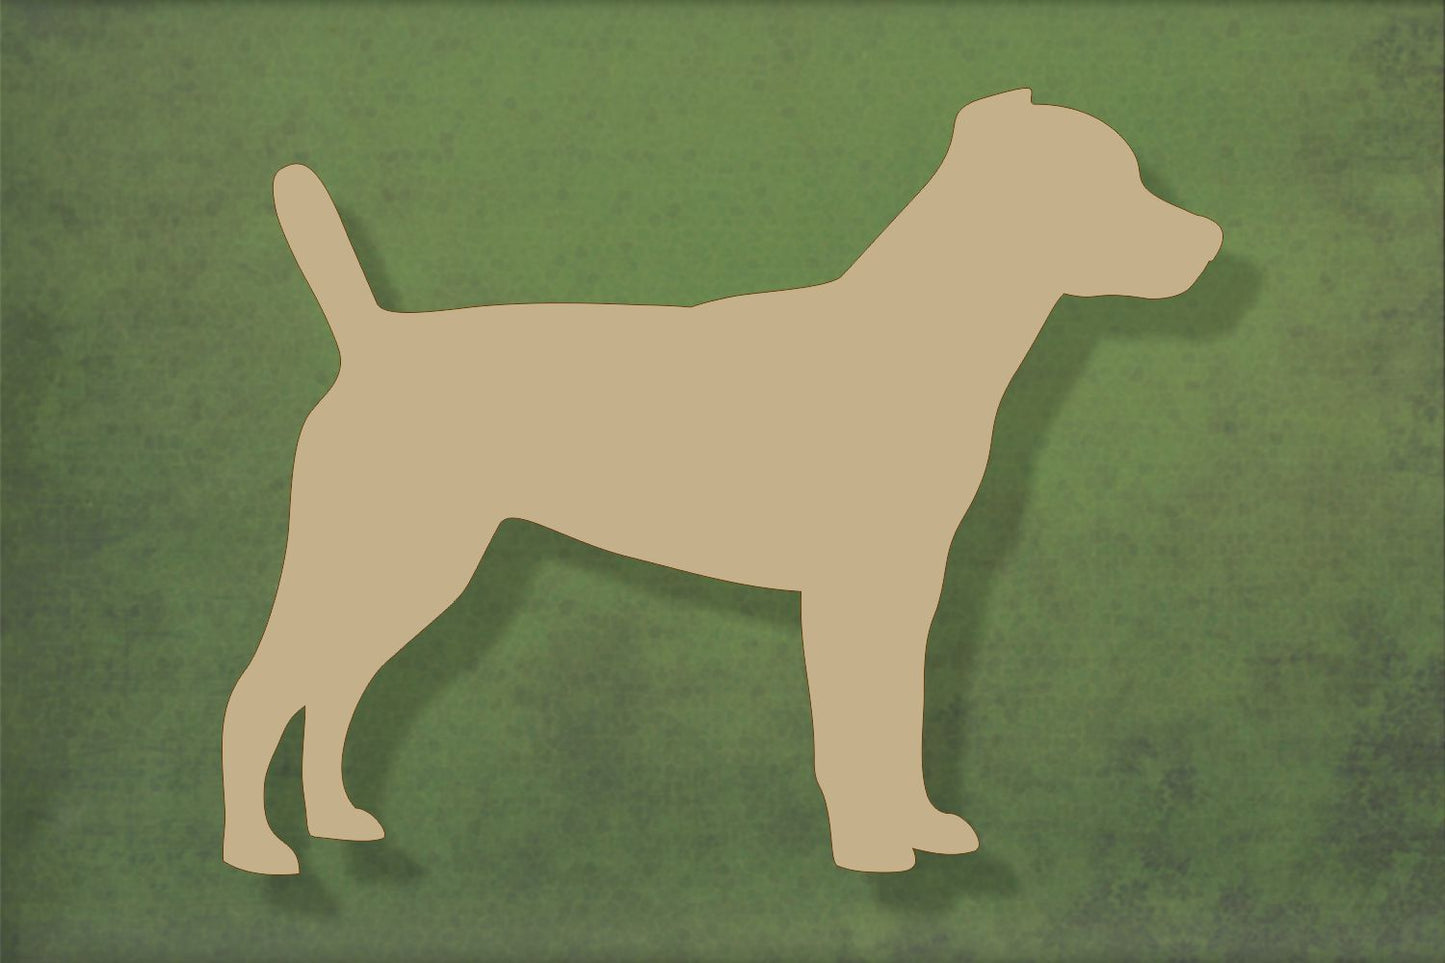 Laser cut, blank wooden Patterdale terrier shape for craft